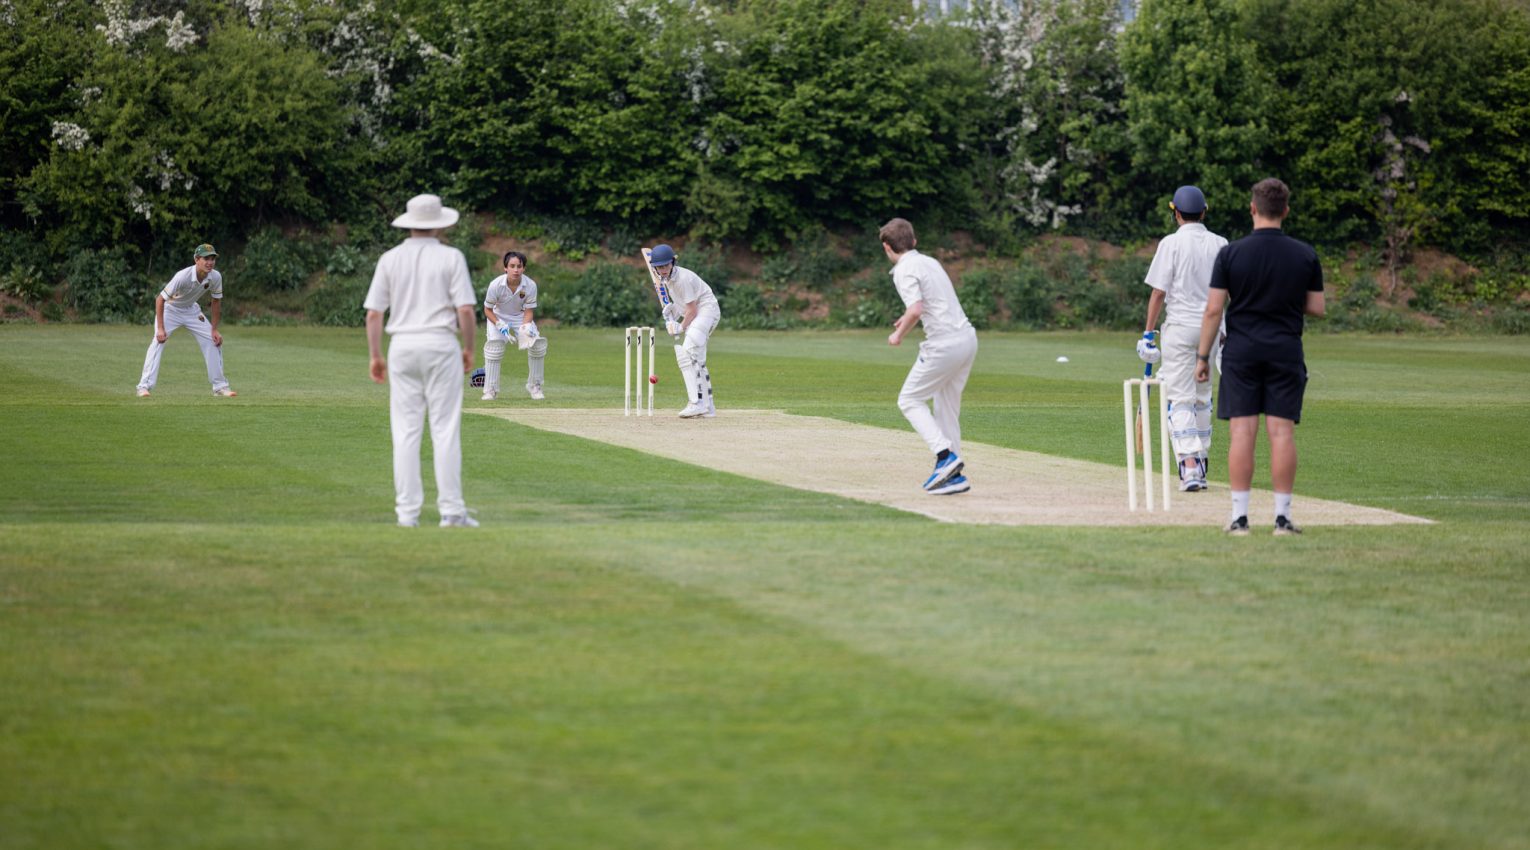 Wetherby Senior cricket at Ealing Trailfinders